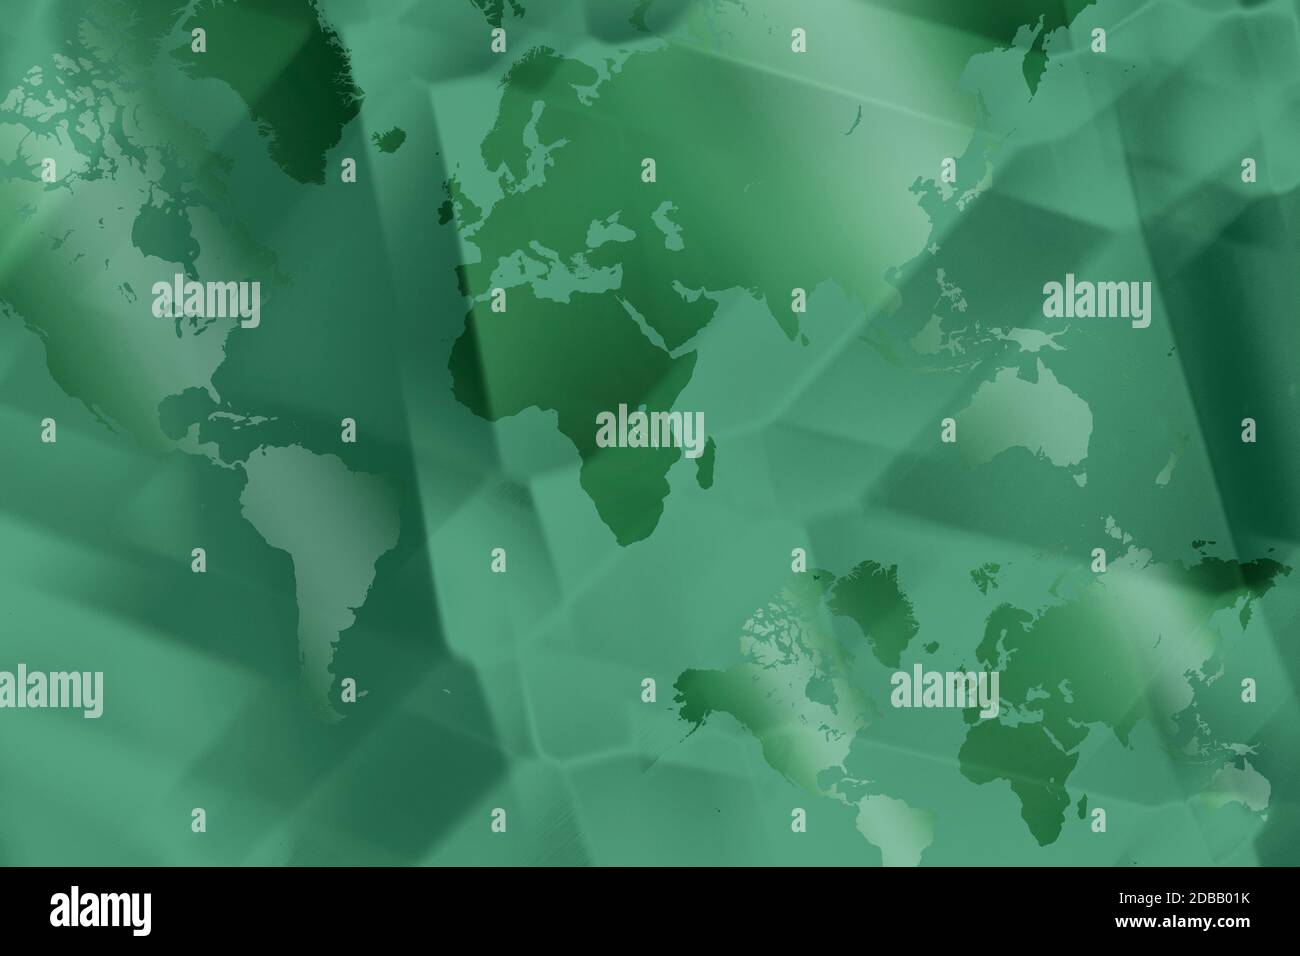 Green abstract digital world map Stock Photo